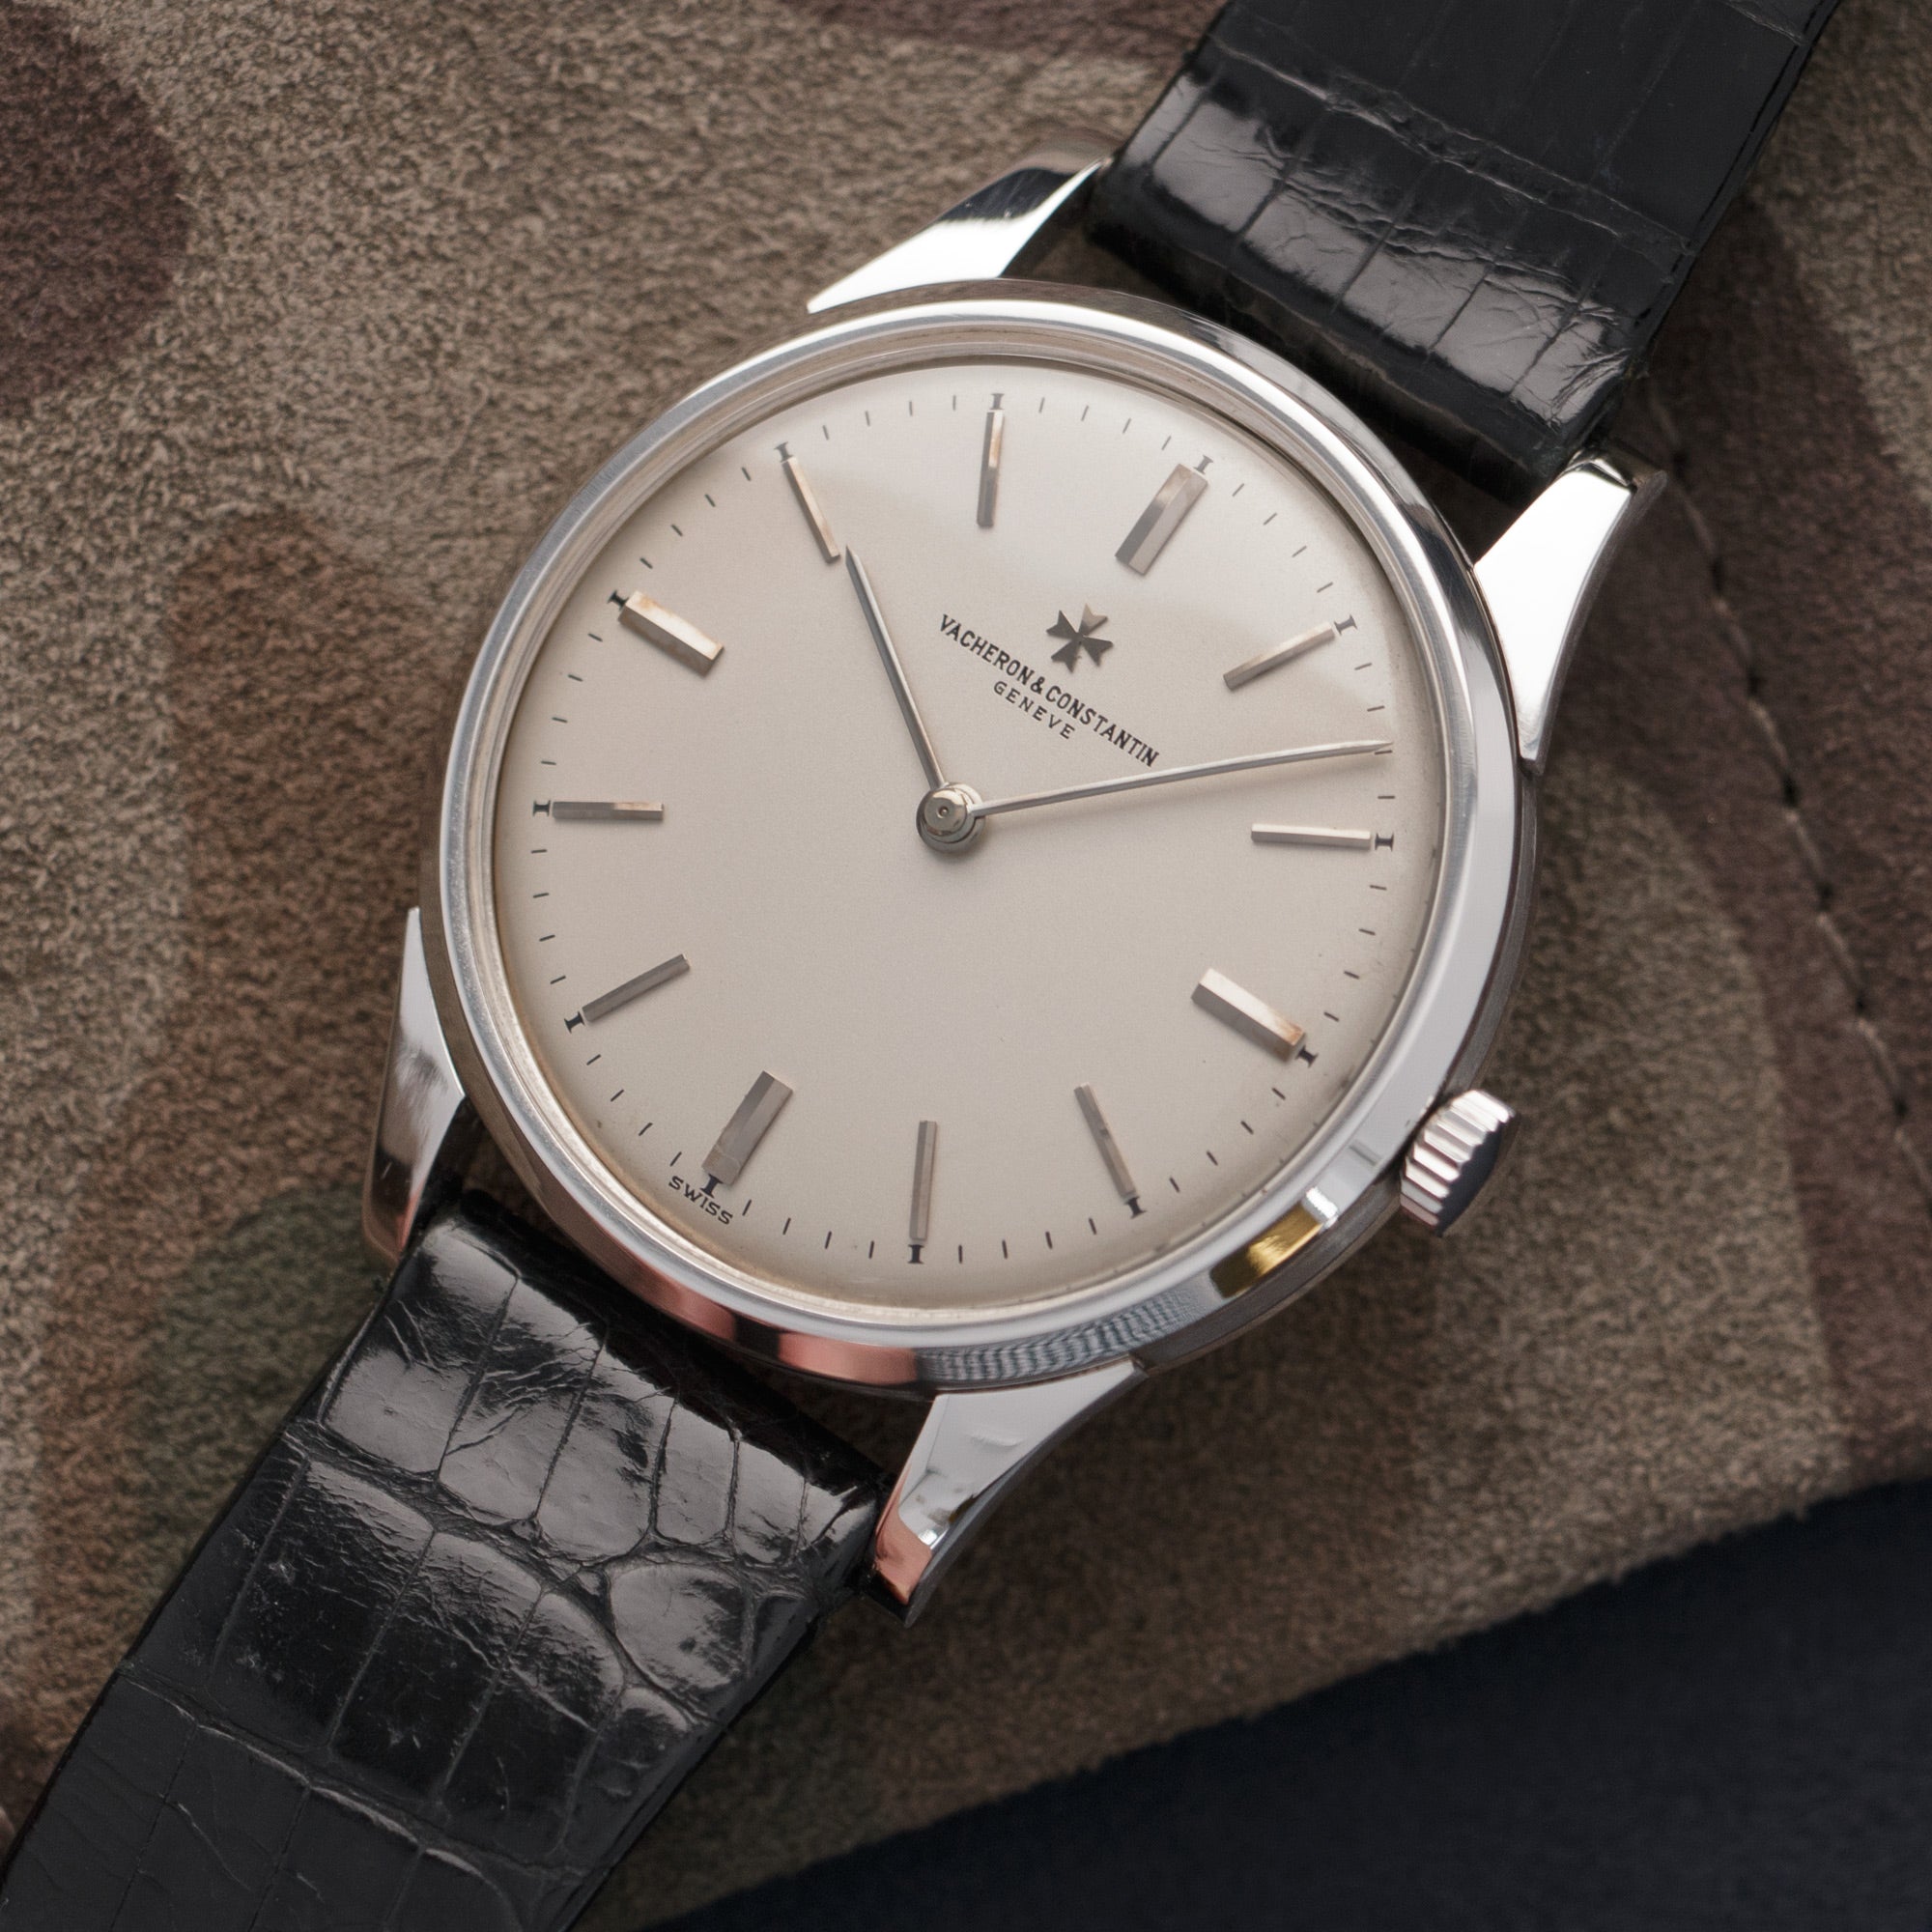 Vacheron Constantin - Vacheron Constantin Platinum Oversized Strap Watch - The Keystone Watches